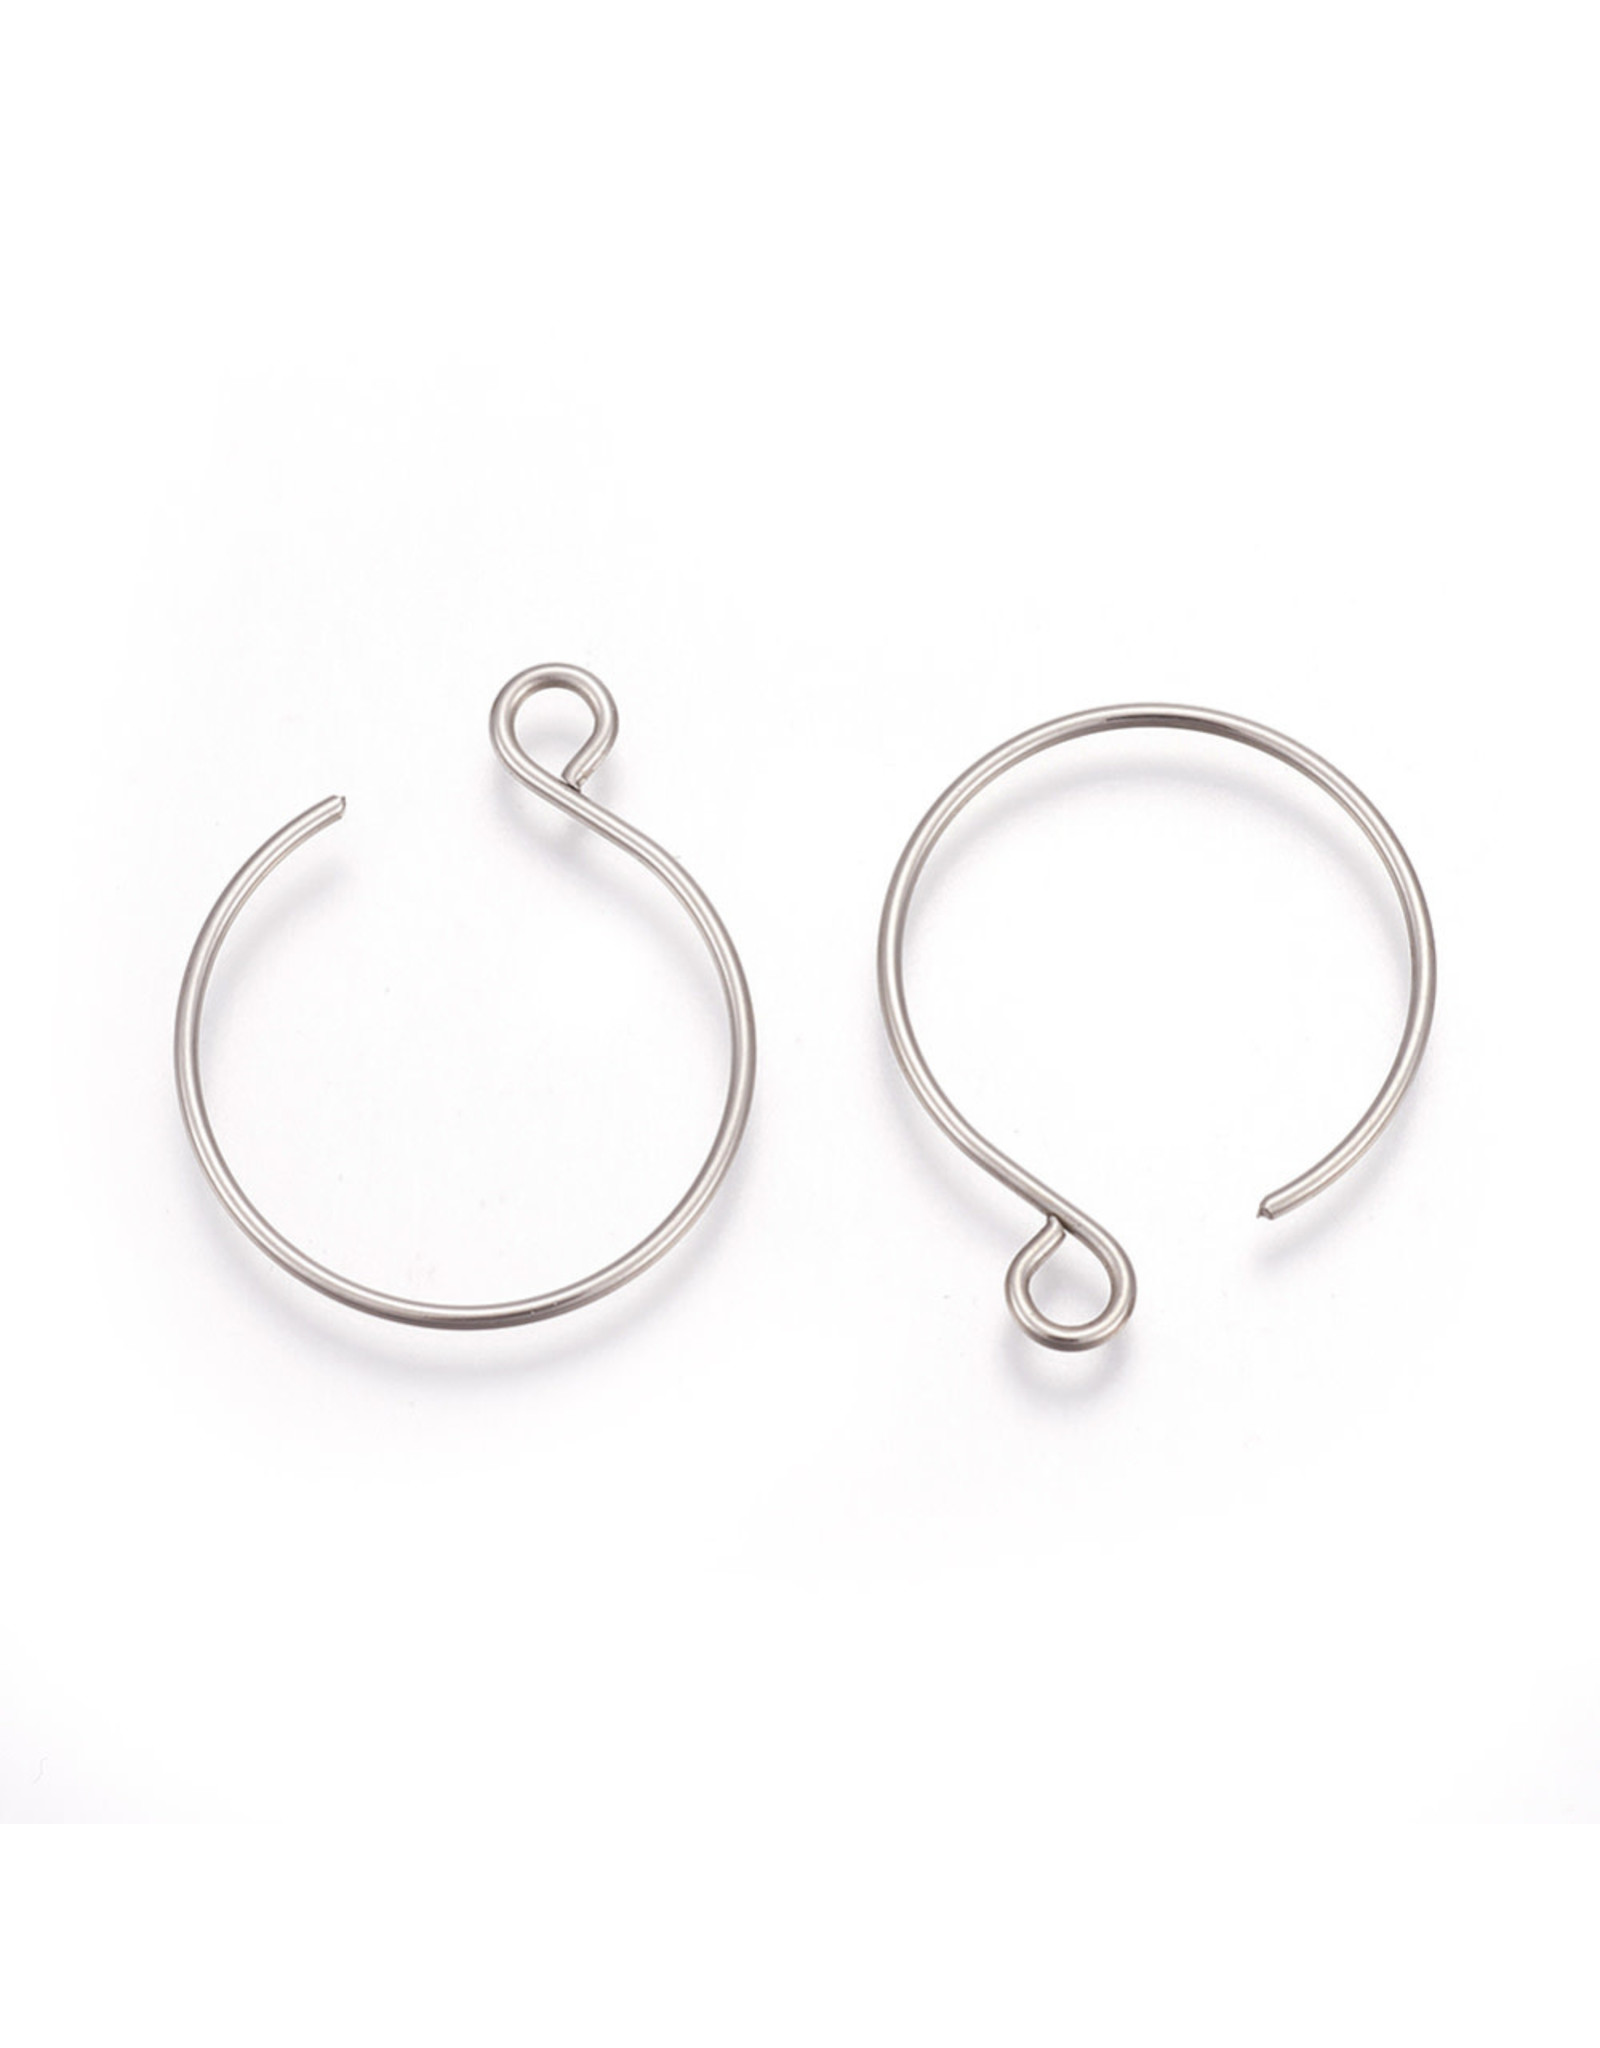 Gold Stainless Steel Ear Wire, Earrings Hooks, Easy Attach, Easy